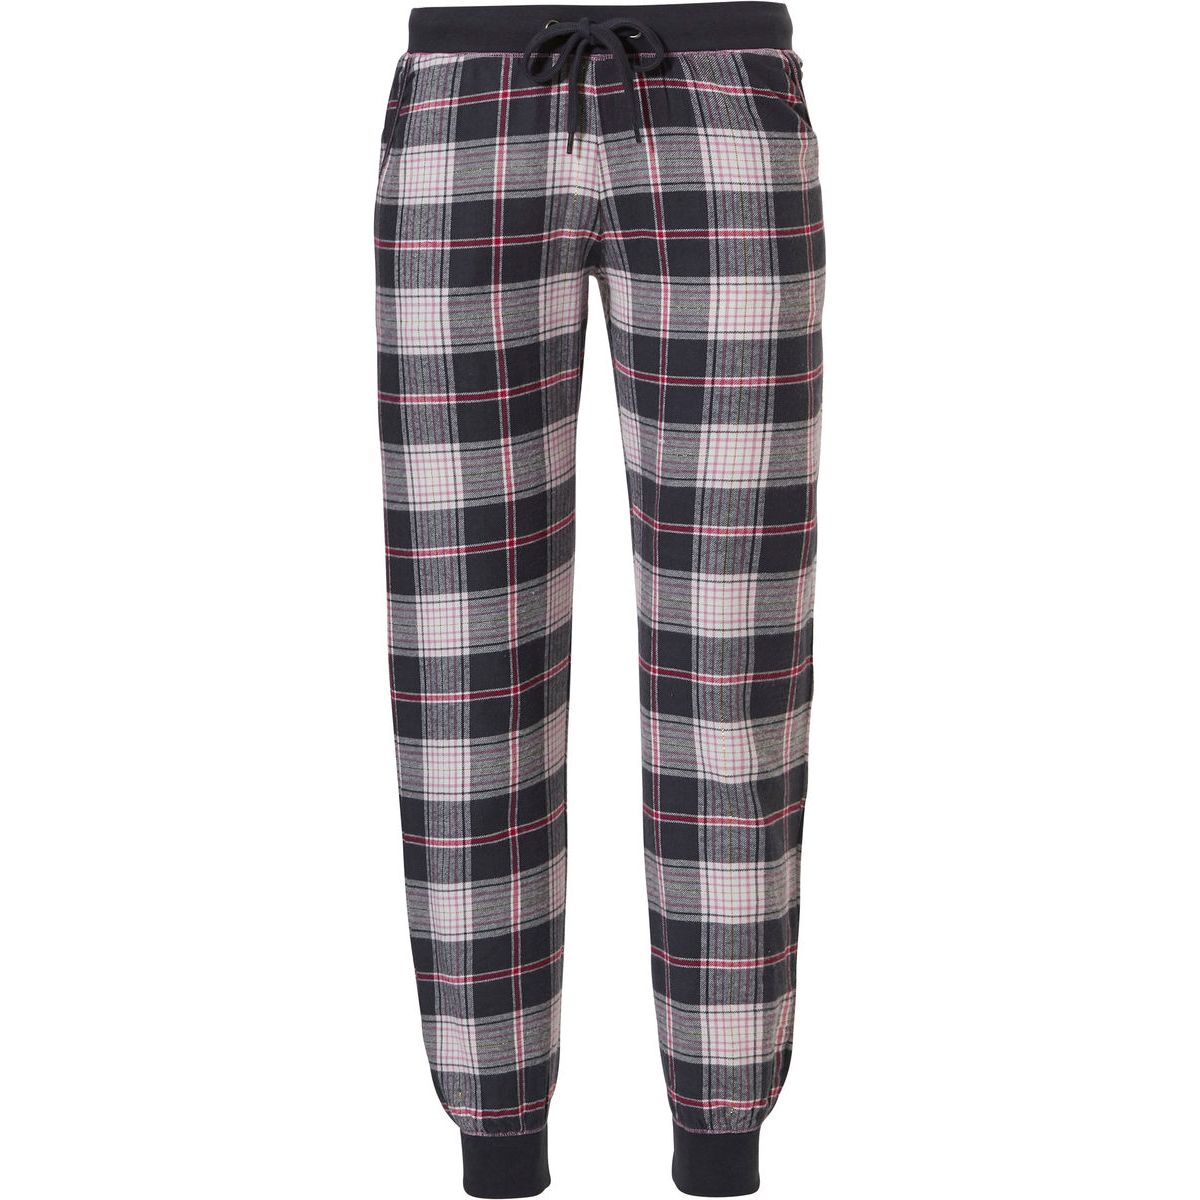 Kleding Dameskleding Pyjamas & Badjassen Pyjamashorts & Pyjamabroeken Broek Happy Women Flanellen Pyjama Broekjes 